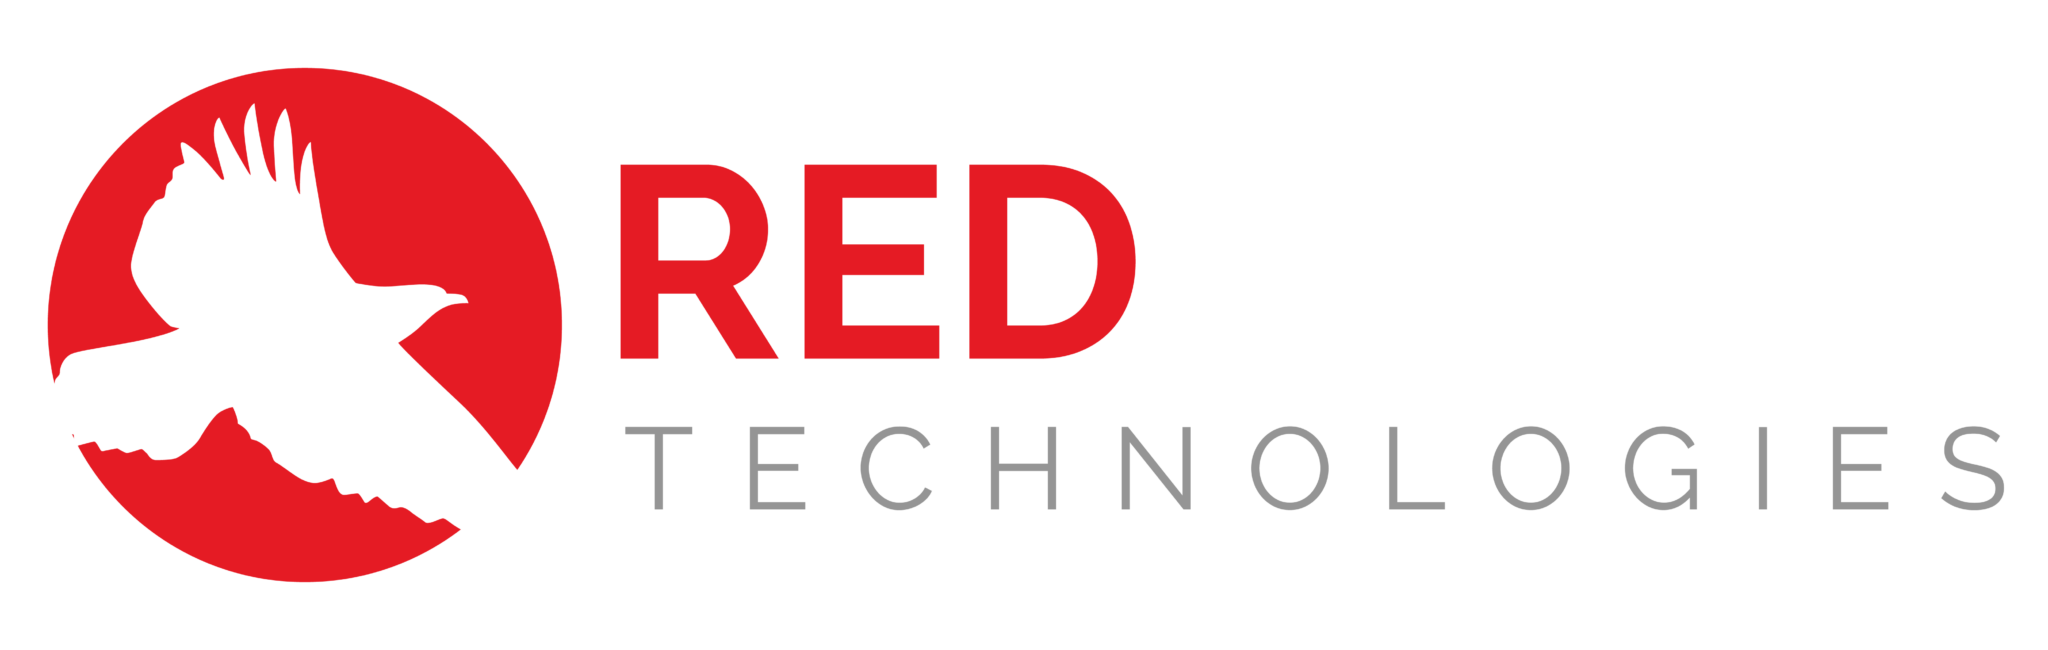 Redhawk Technologies logo